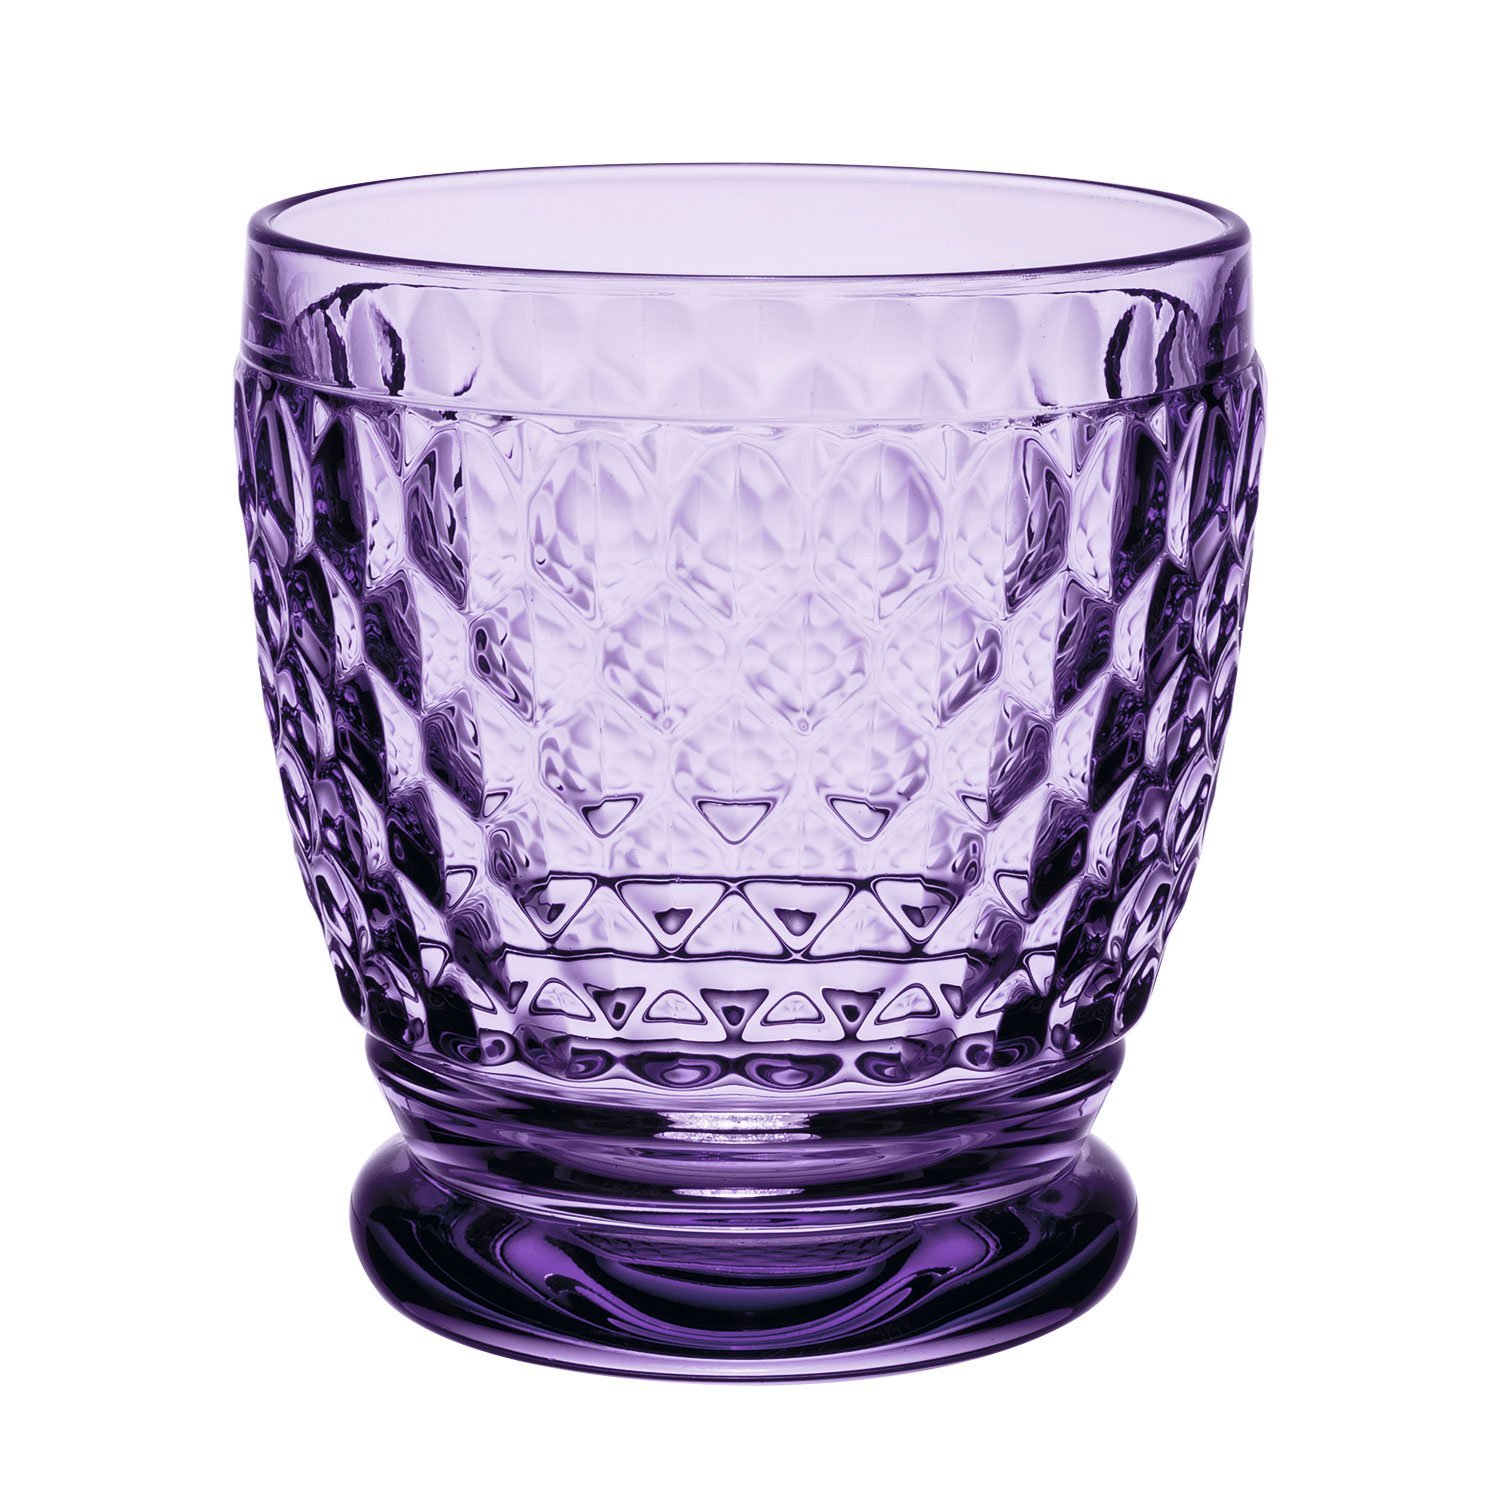 Boston Lavender Стакан для виски 200 мл Villeroy & Boch
https://spb.v-b.ru
г.Санкт-Петербург
eshop@v-b.spb.ru
+7(812)3801977